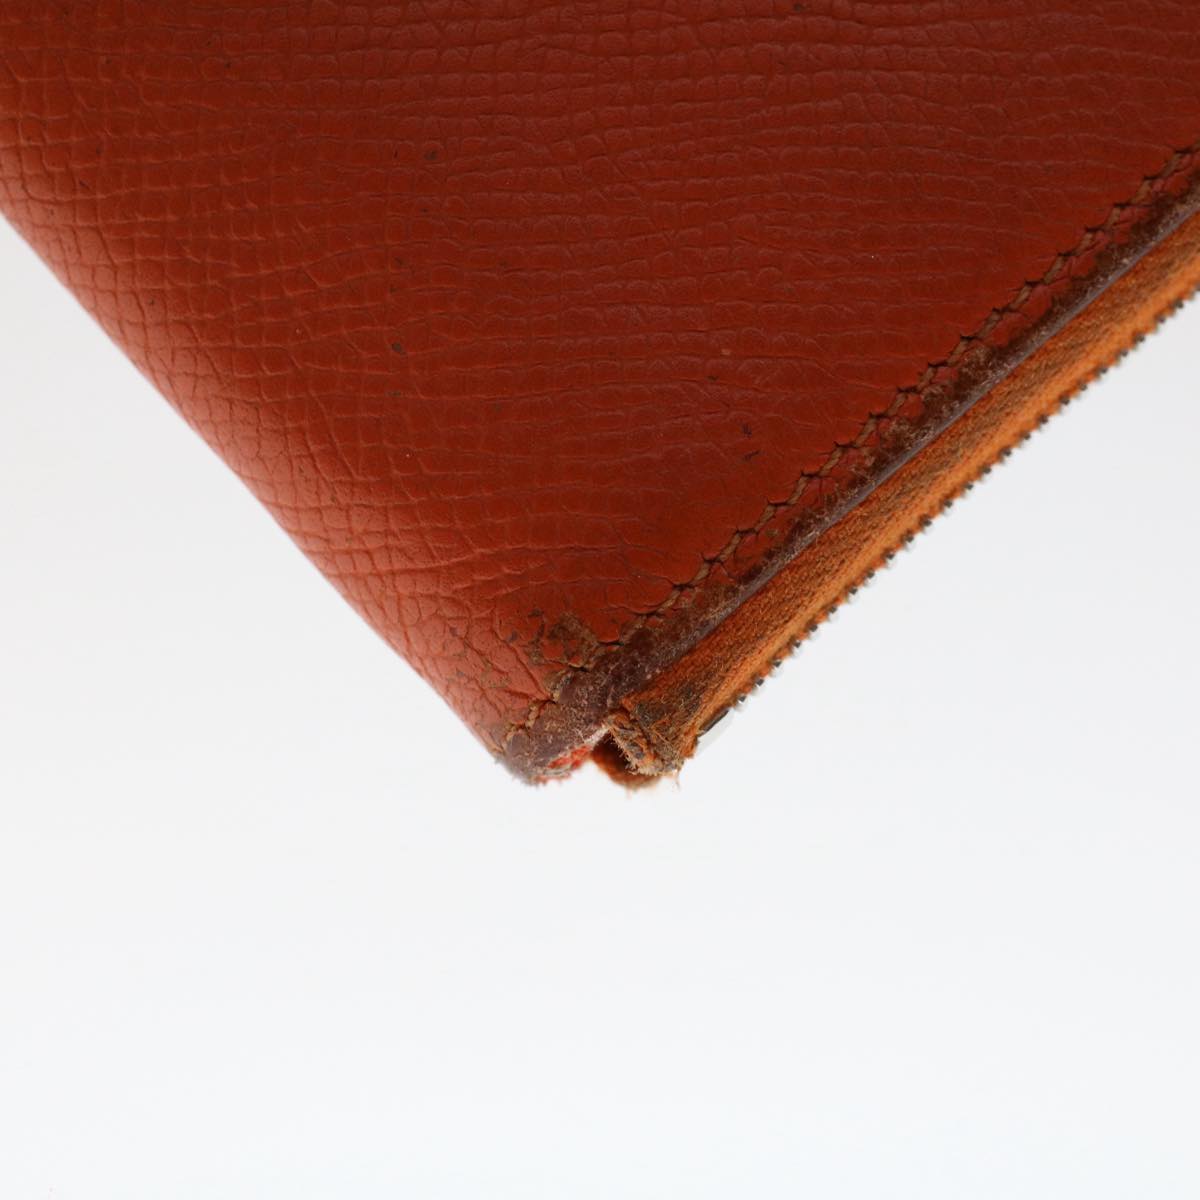 HERMES Azap Wallet Leather Orange Auth tb854